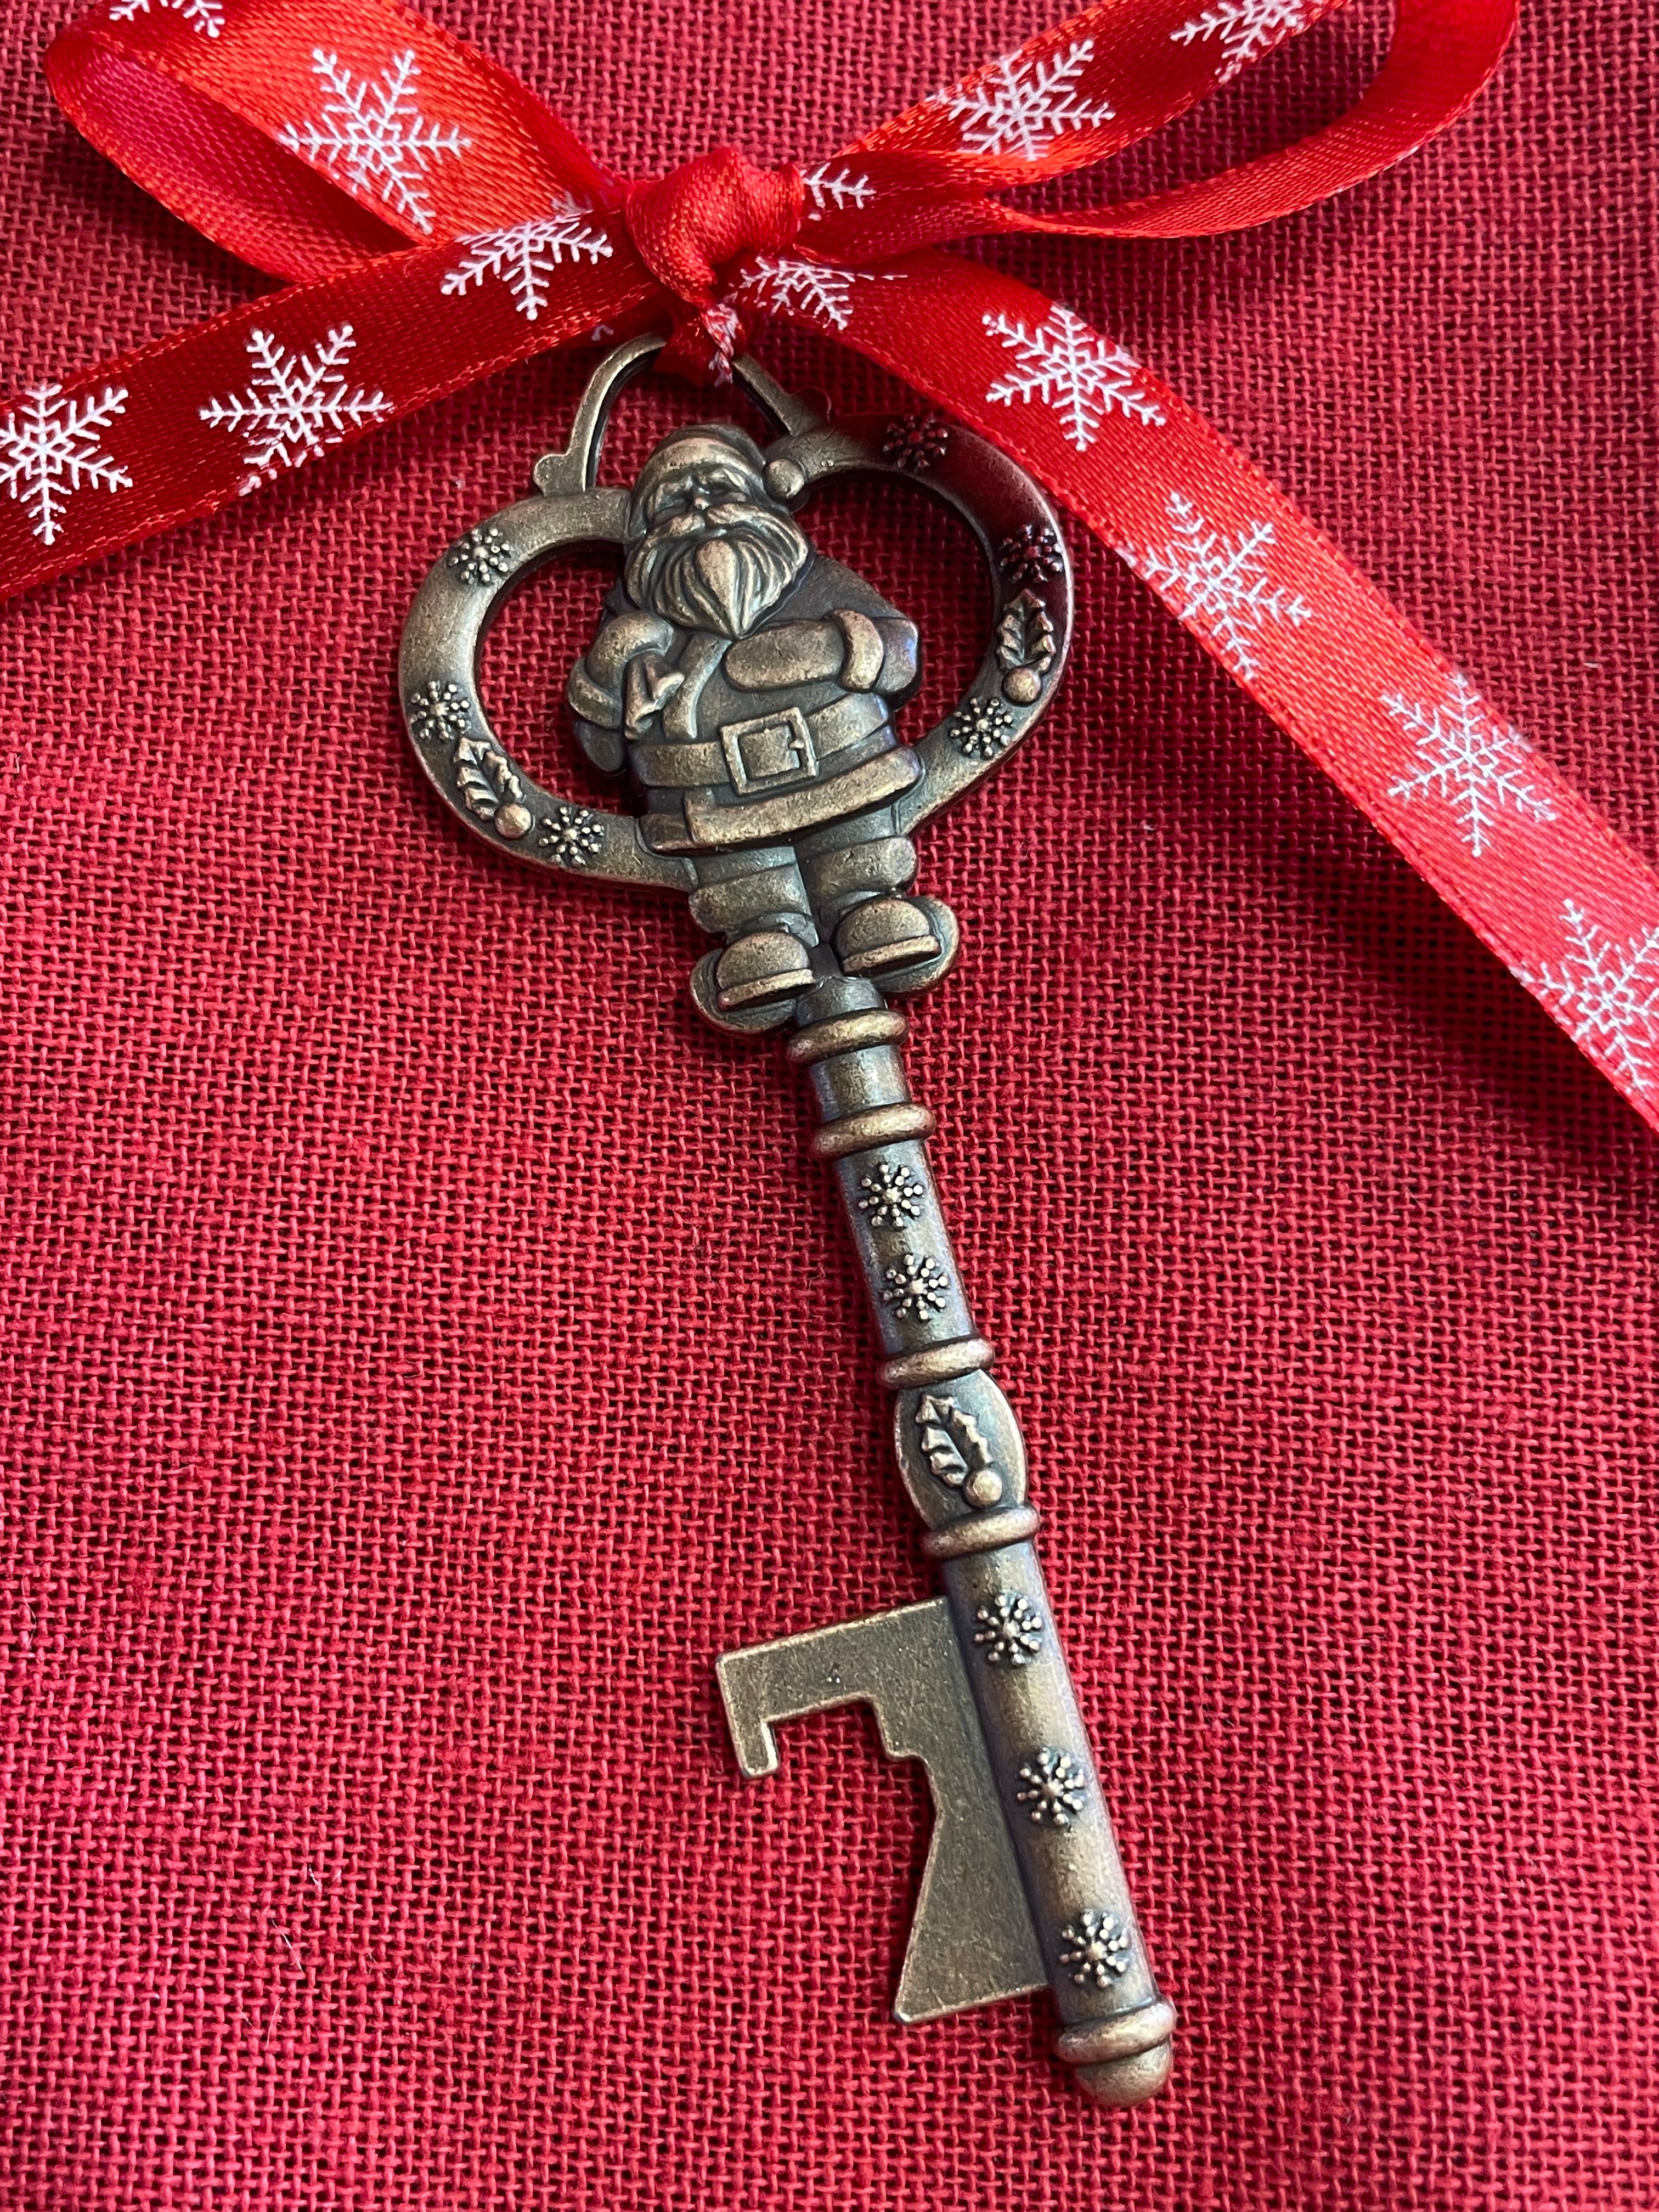 Santa's magic key - new Christmas tradition